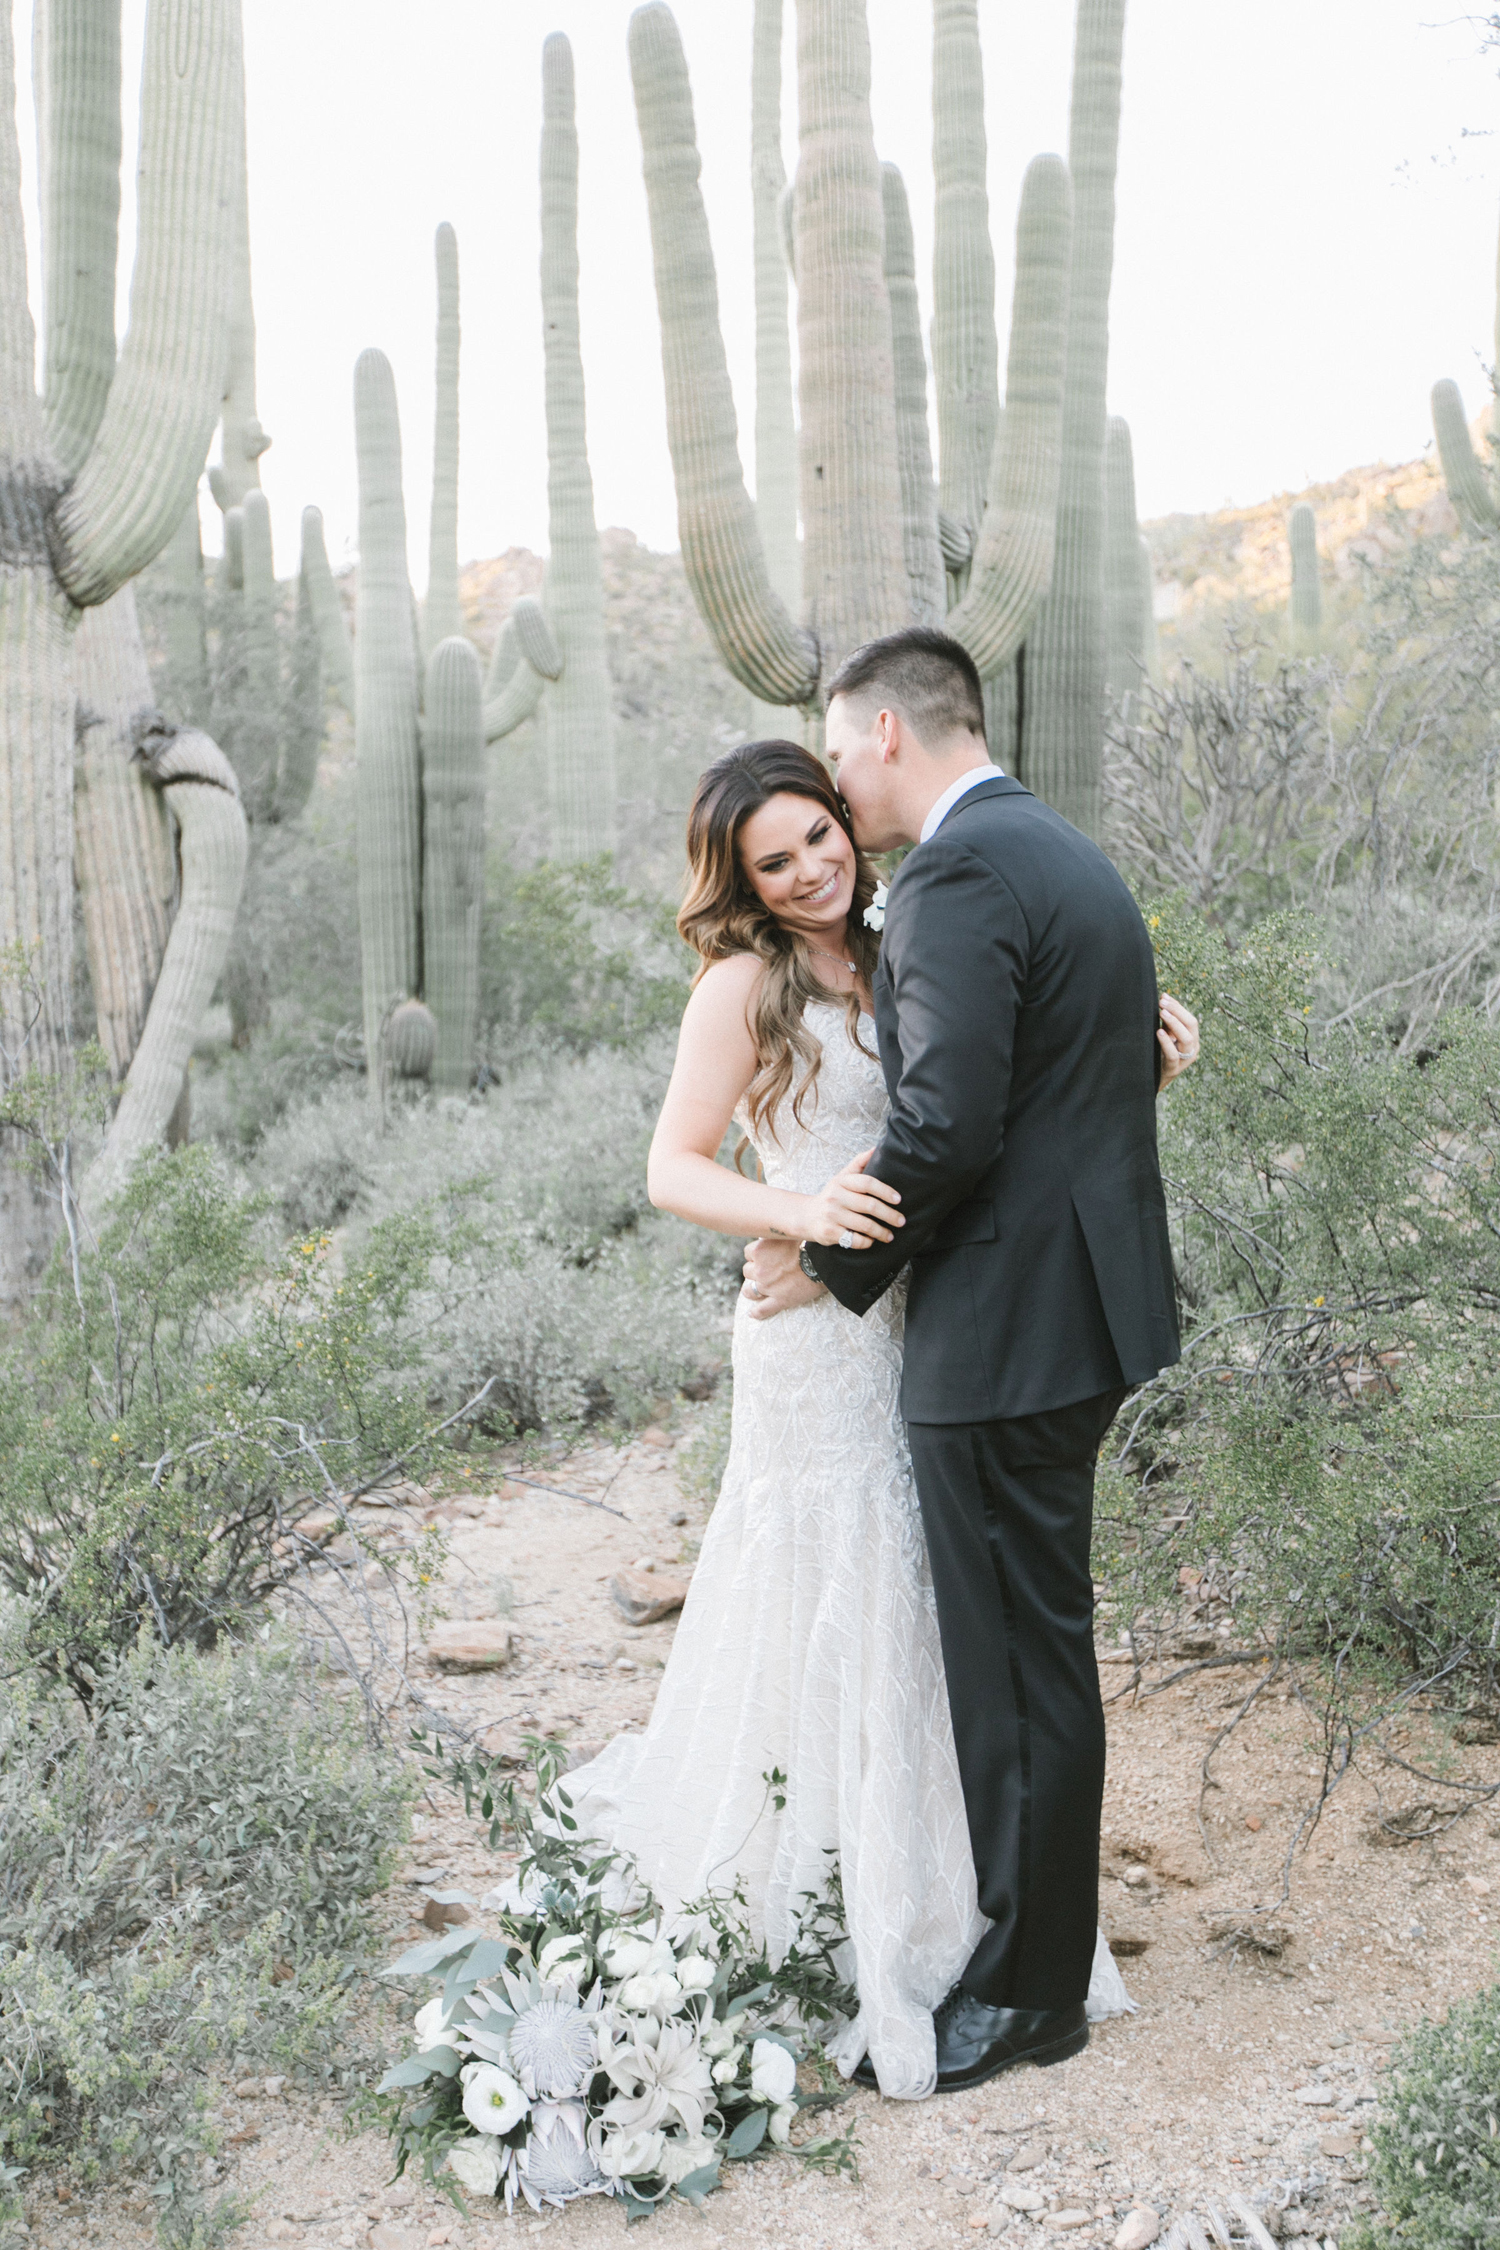 Wes and Erin's wedding at The Ritz Carlton Dove Mountain in beautiful Arizona. Get a closer look at KatinaPhotography.com #ArizonaWeddingPhotographer #RitzCarltonWedding #WeddingInspiration #DesertWeddingIdeas 